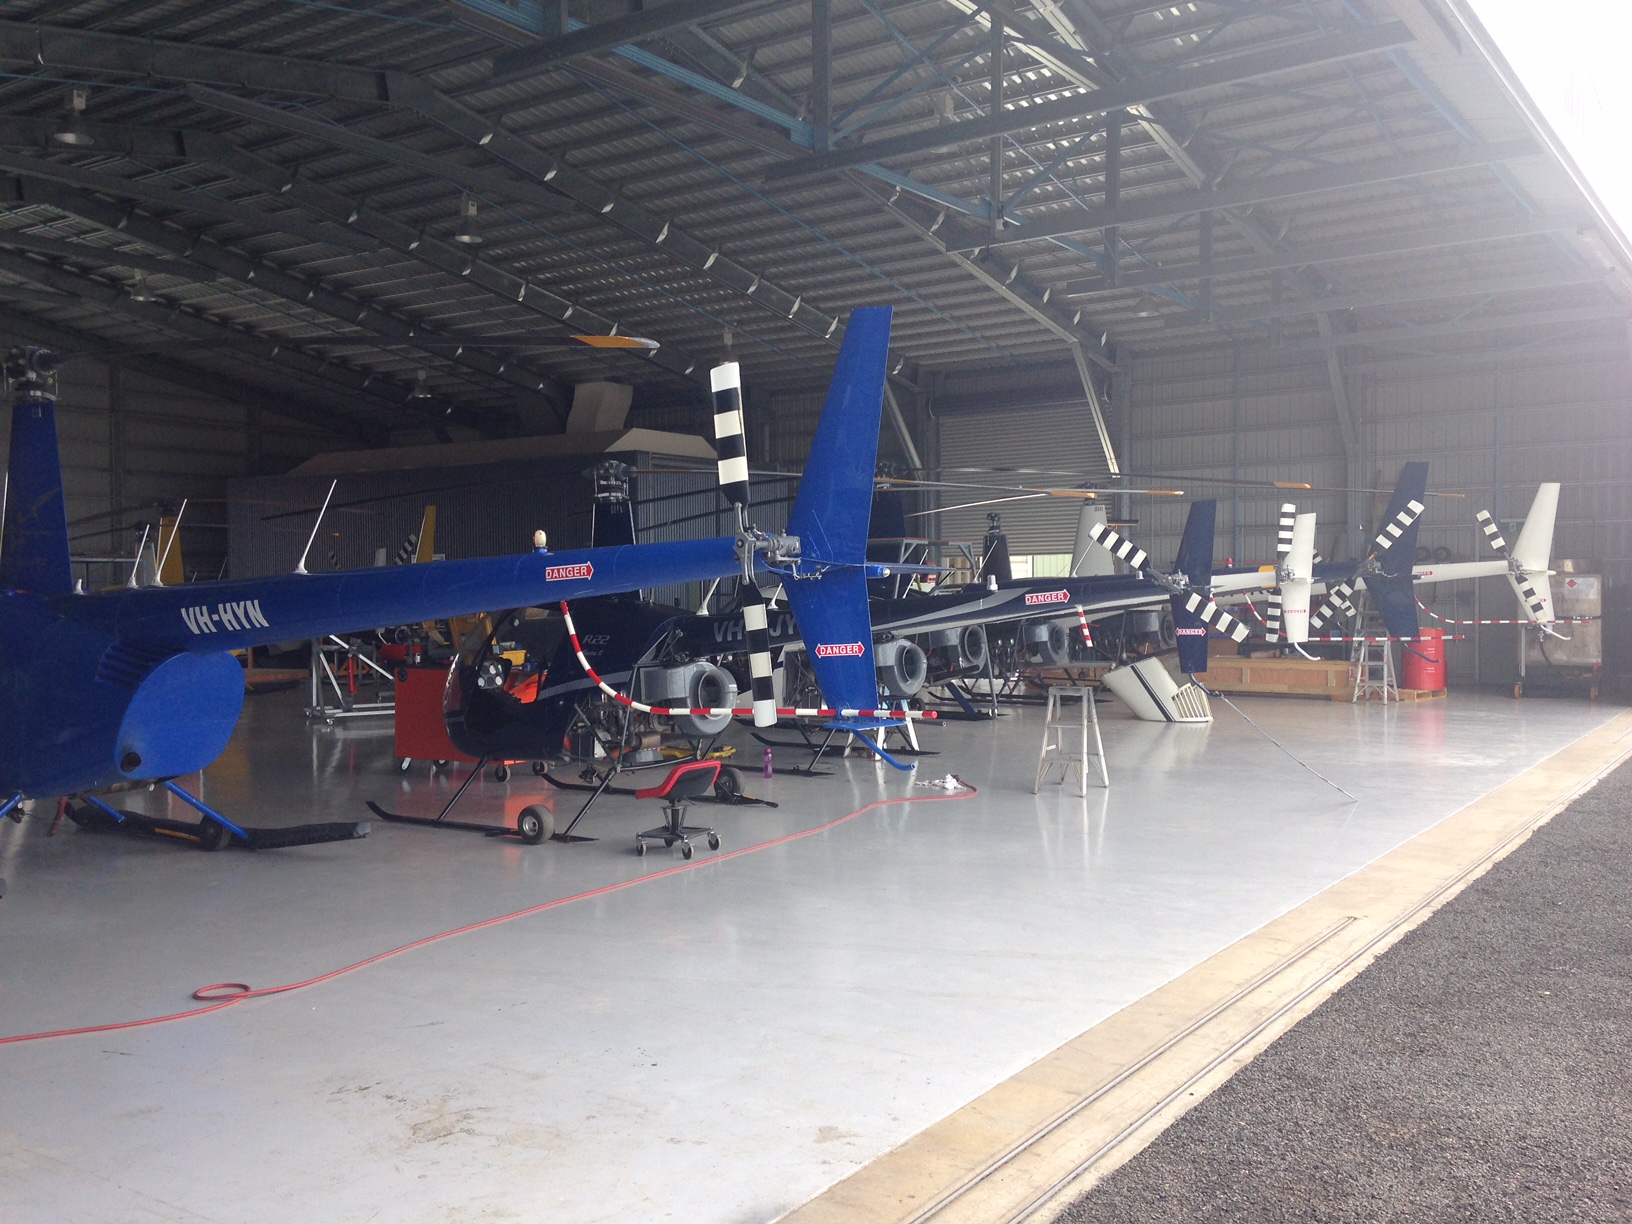 Steel Frame Aircraft Hangars